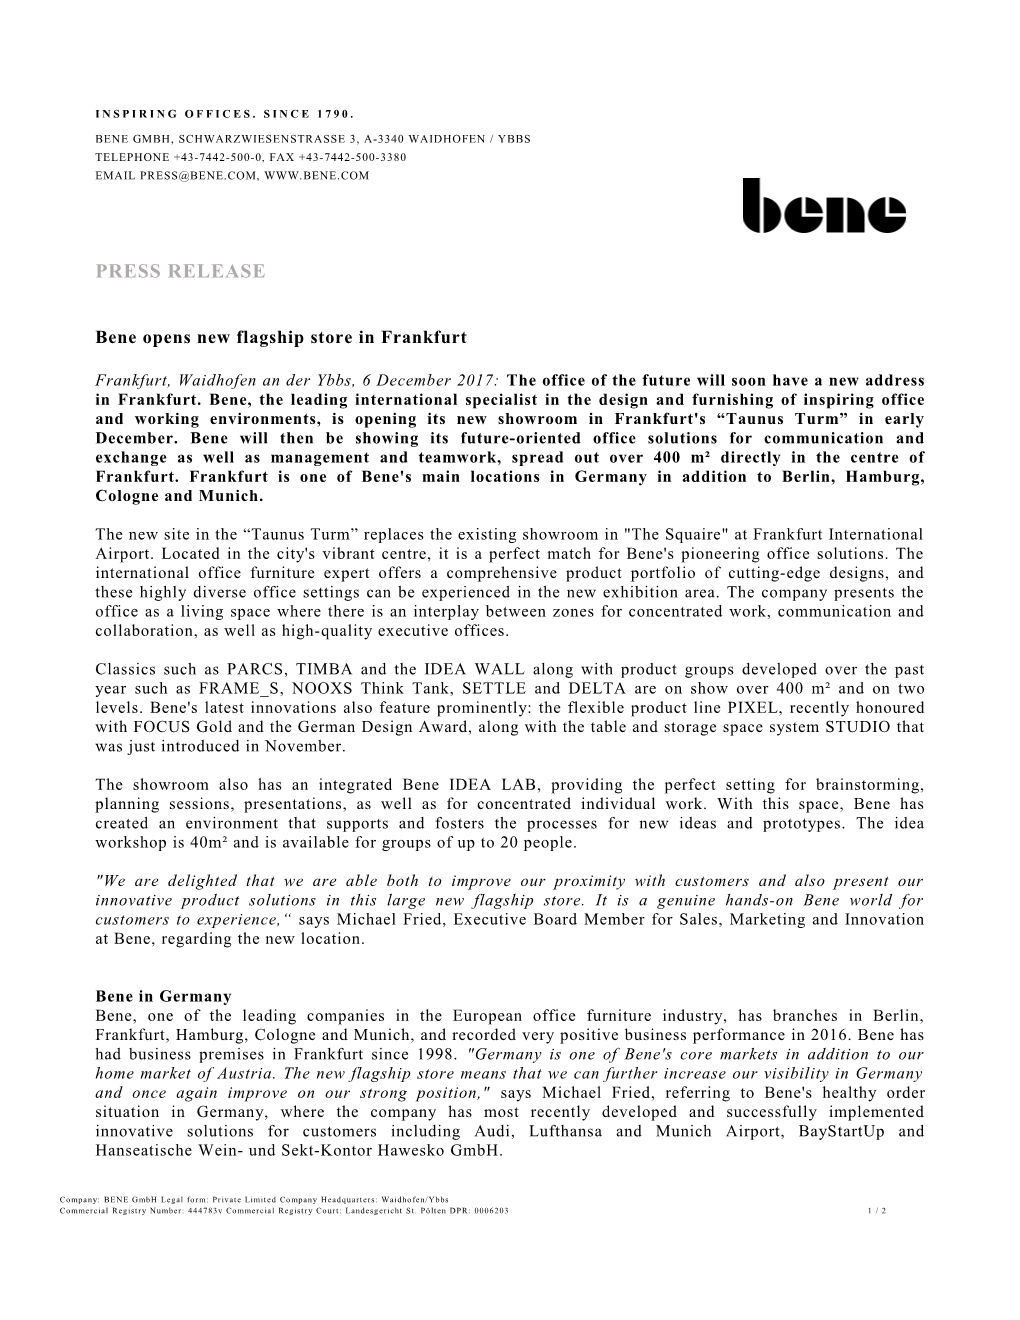 Bene Opens New Flagship Store in Frankfurt